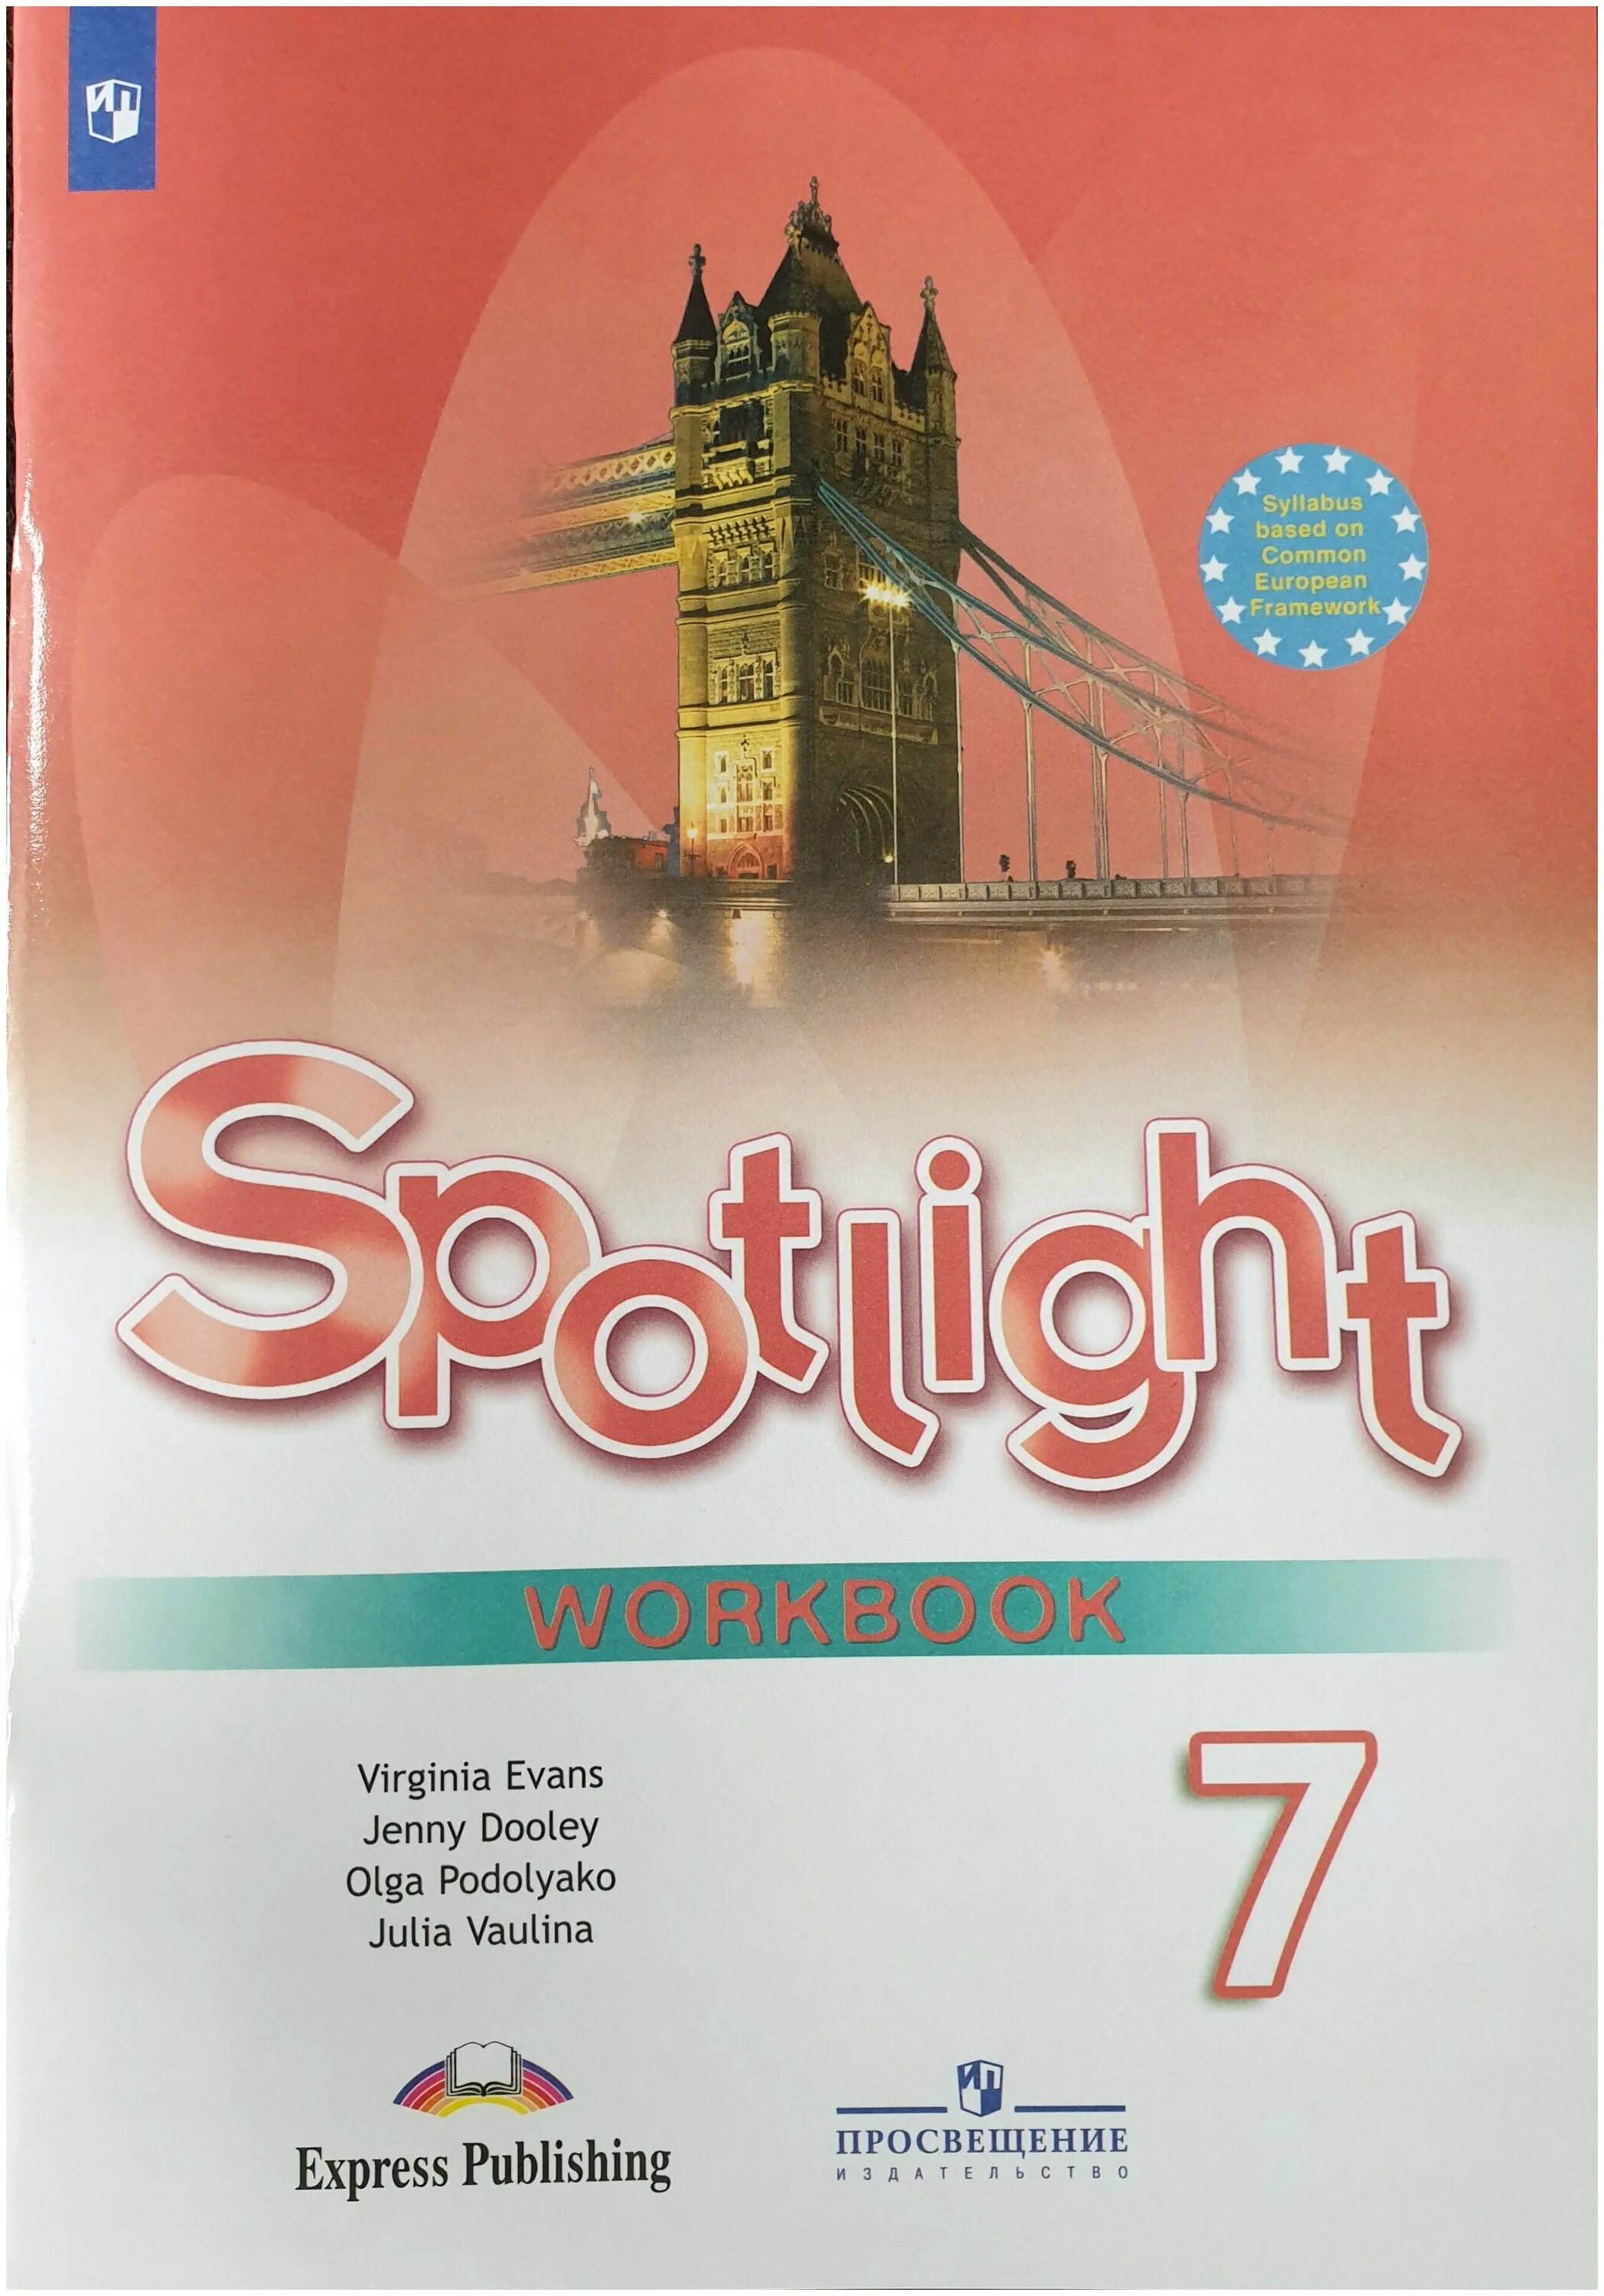 Книга ваулина 7. Workbook Spotlight 5 класс ваулина. Spotlight 5 Workbook английский язык Эванс. Англ 5 класс рабочая тетрадь Spotlight. Тетради для английского языка 5 класс спотлайт.